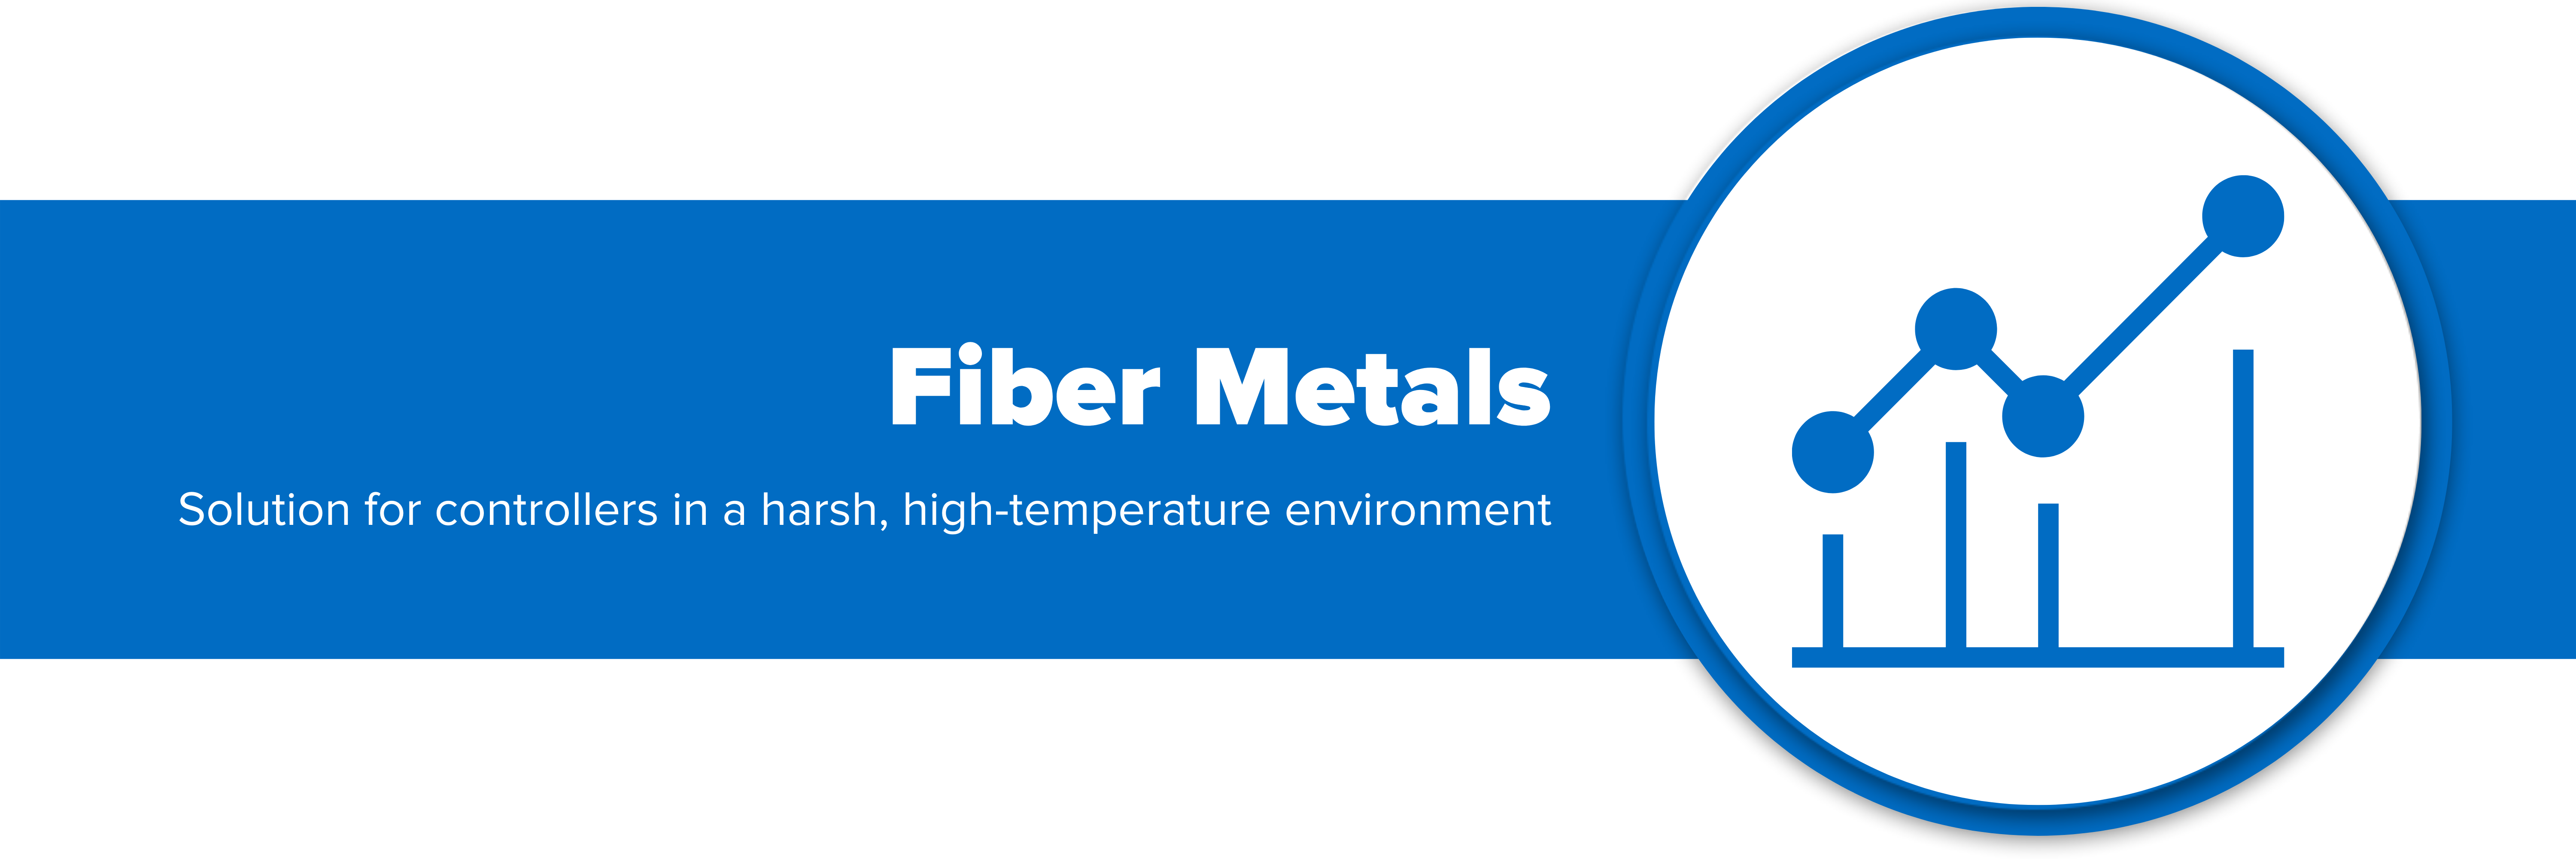 Header image with text "Fiber Metals"